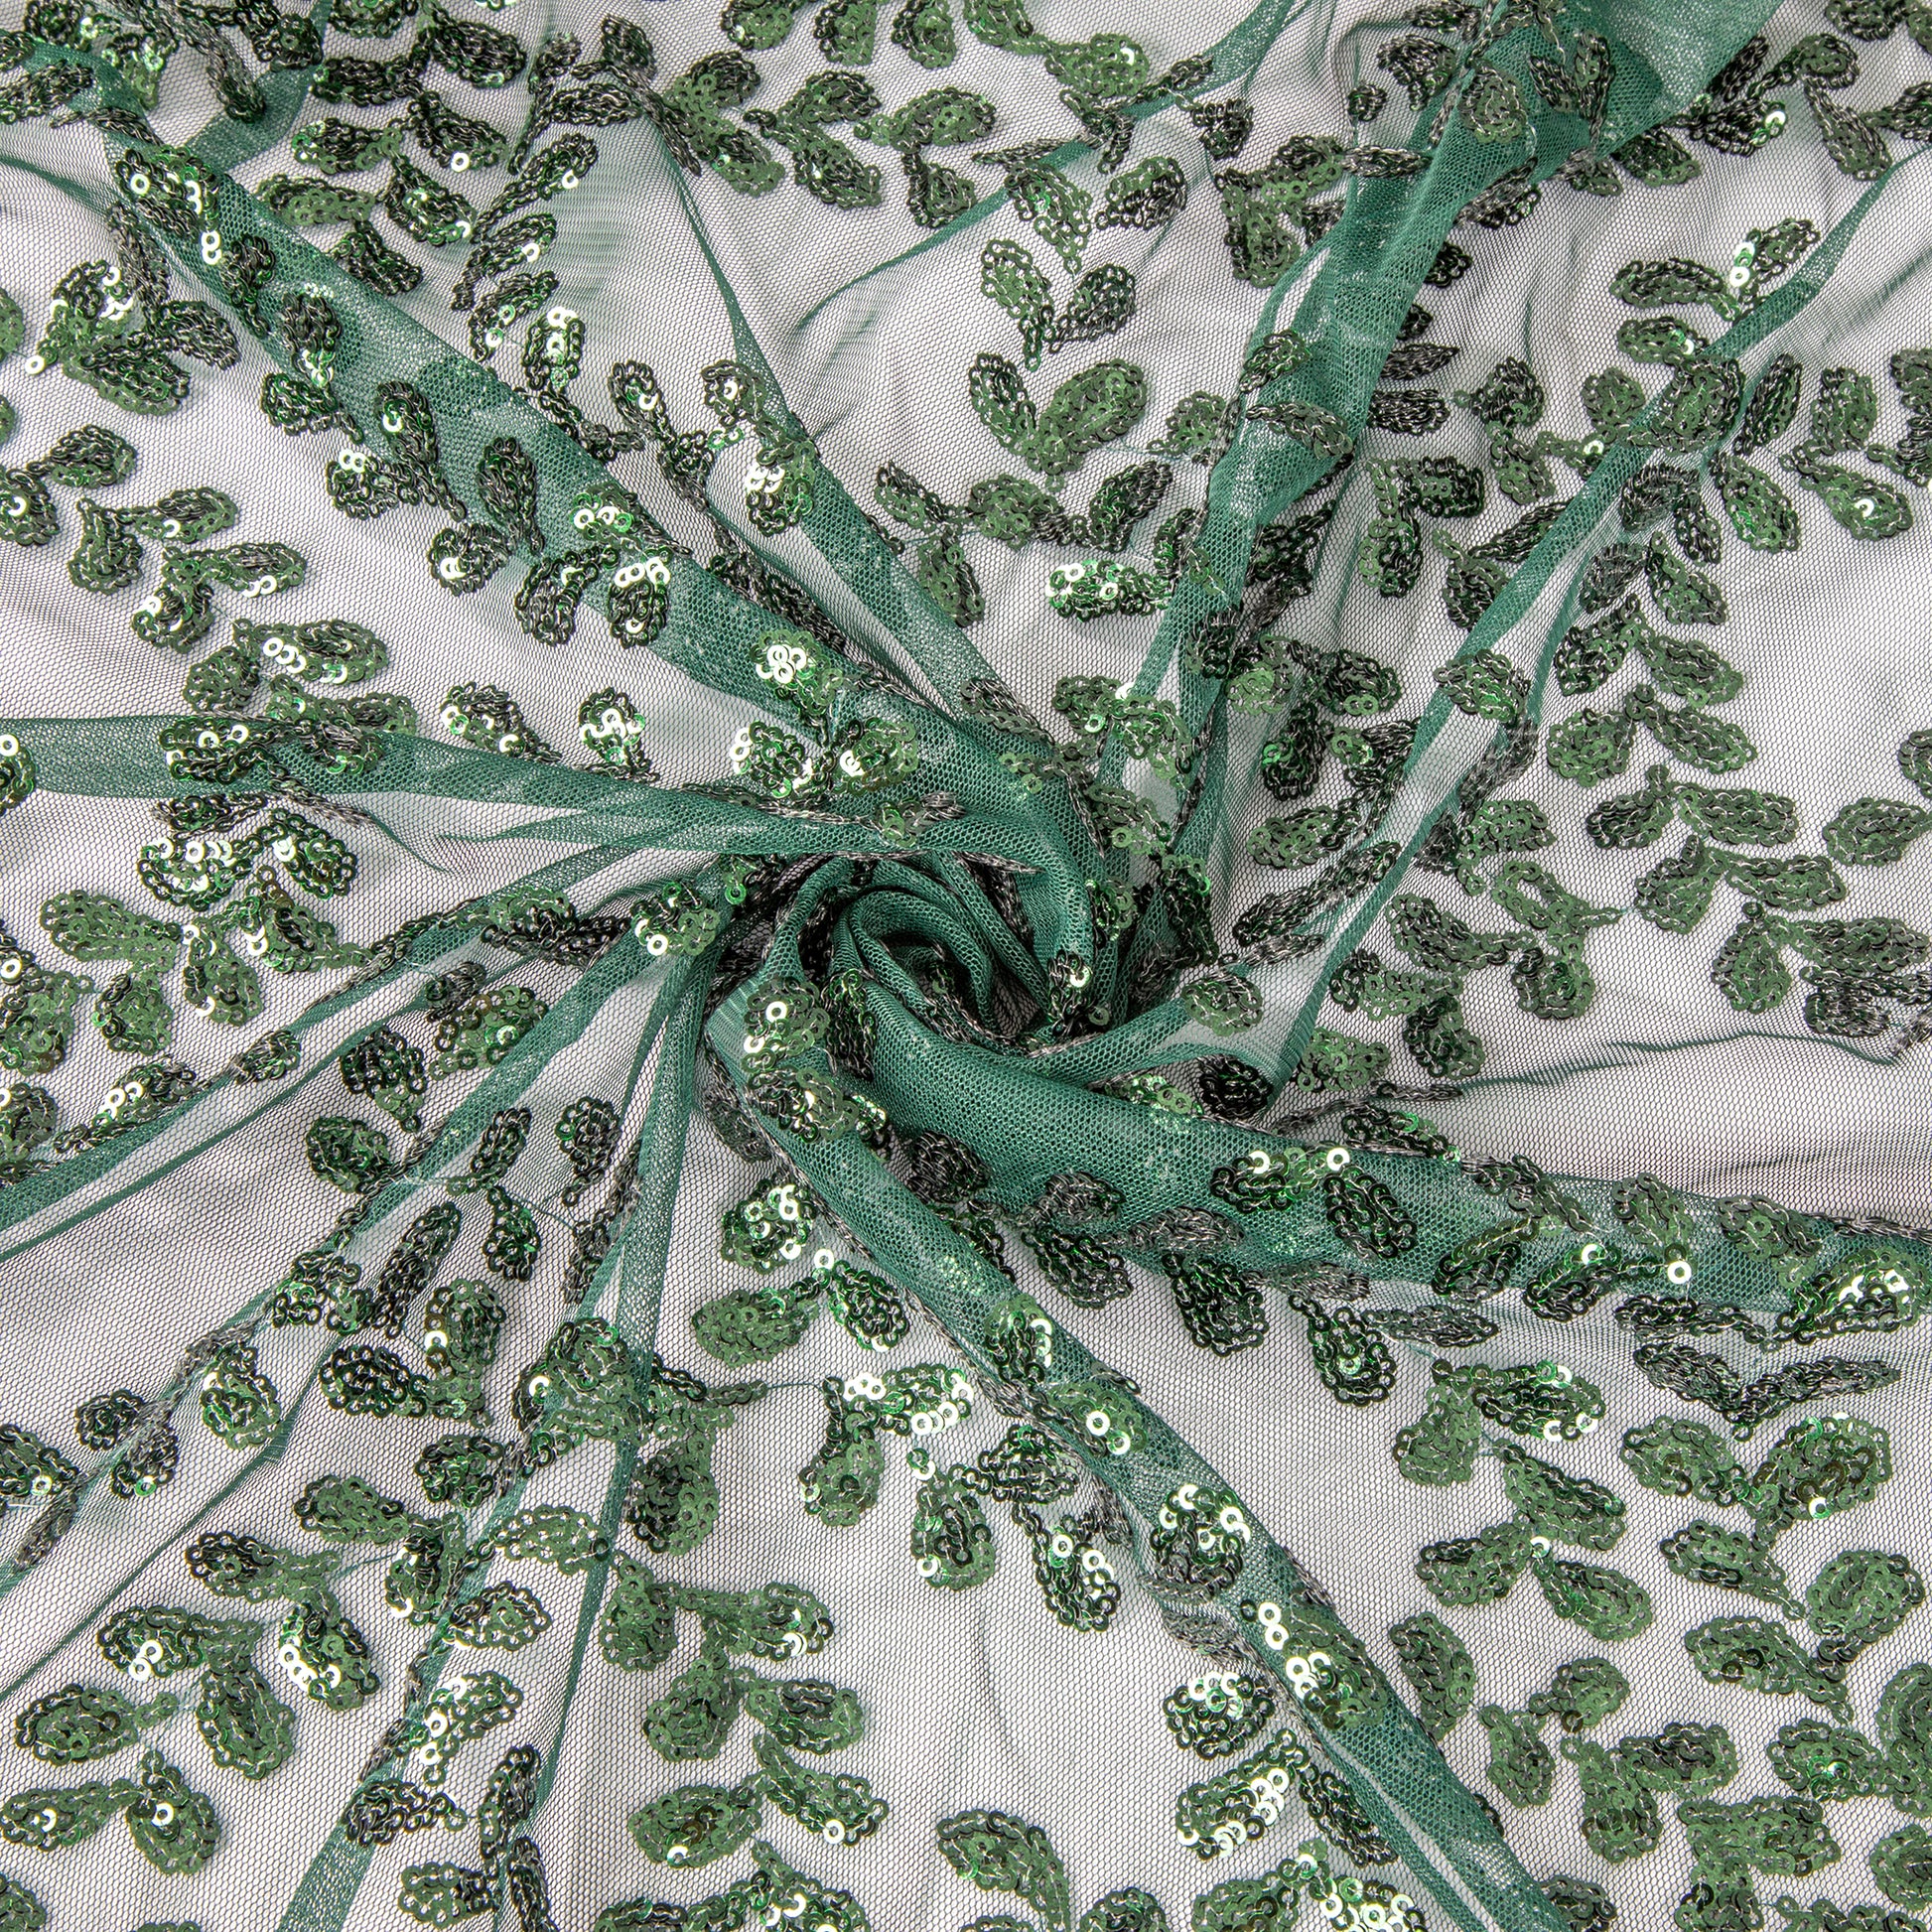 Sequin Vine Tablecloth Overlay 90"x132" Rectangle - Emerald Green